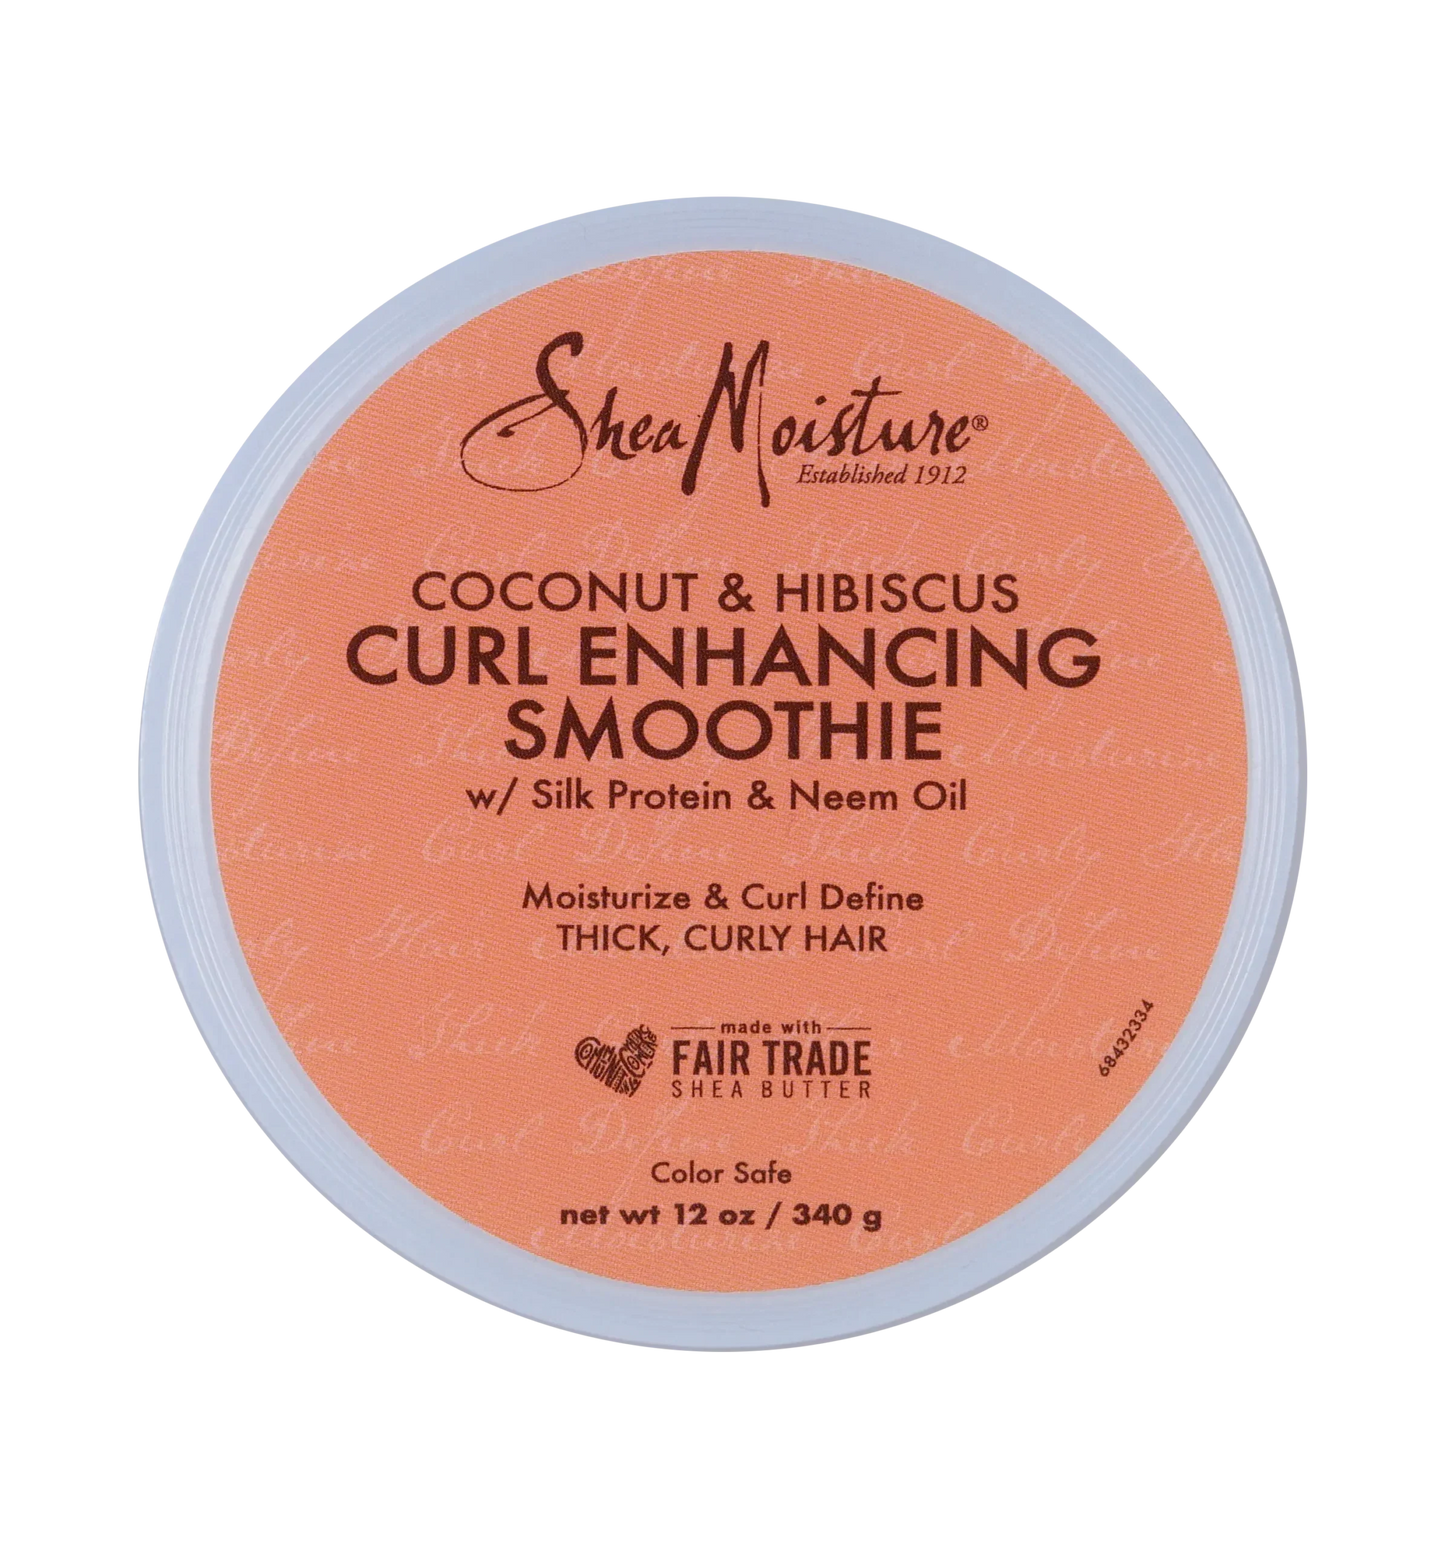 Shea Moisture Coconut & Hibiscus Curl Enhancing Smoothie